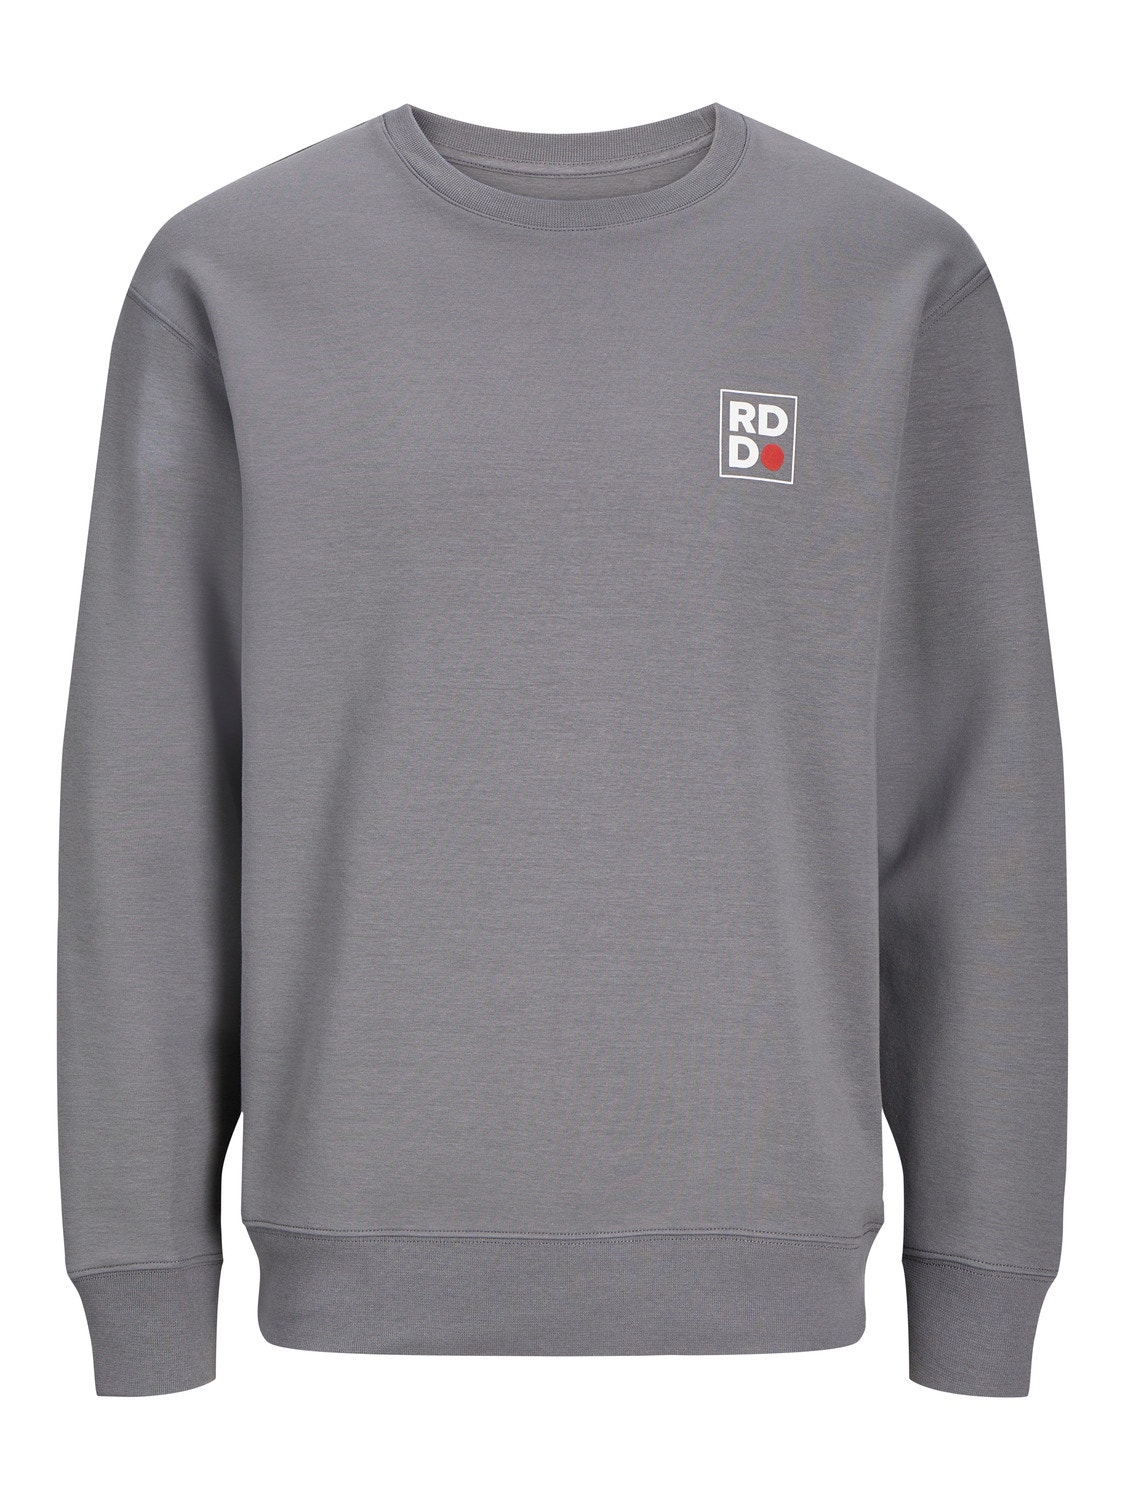 Jack & Jones RDD Logo Crew neck Sweatshirt -Charcoal Gray - 12230356